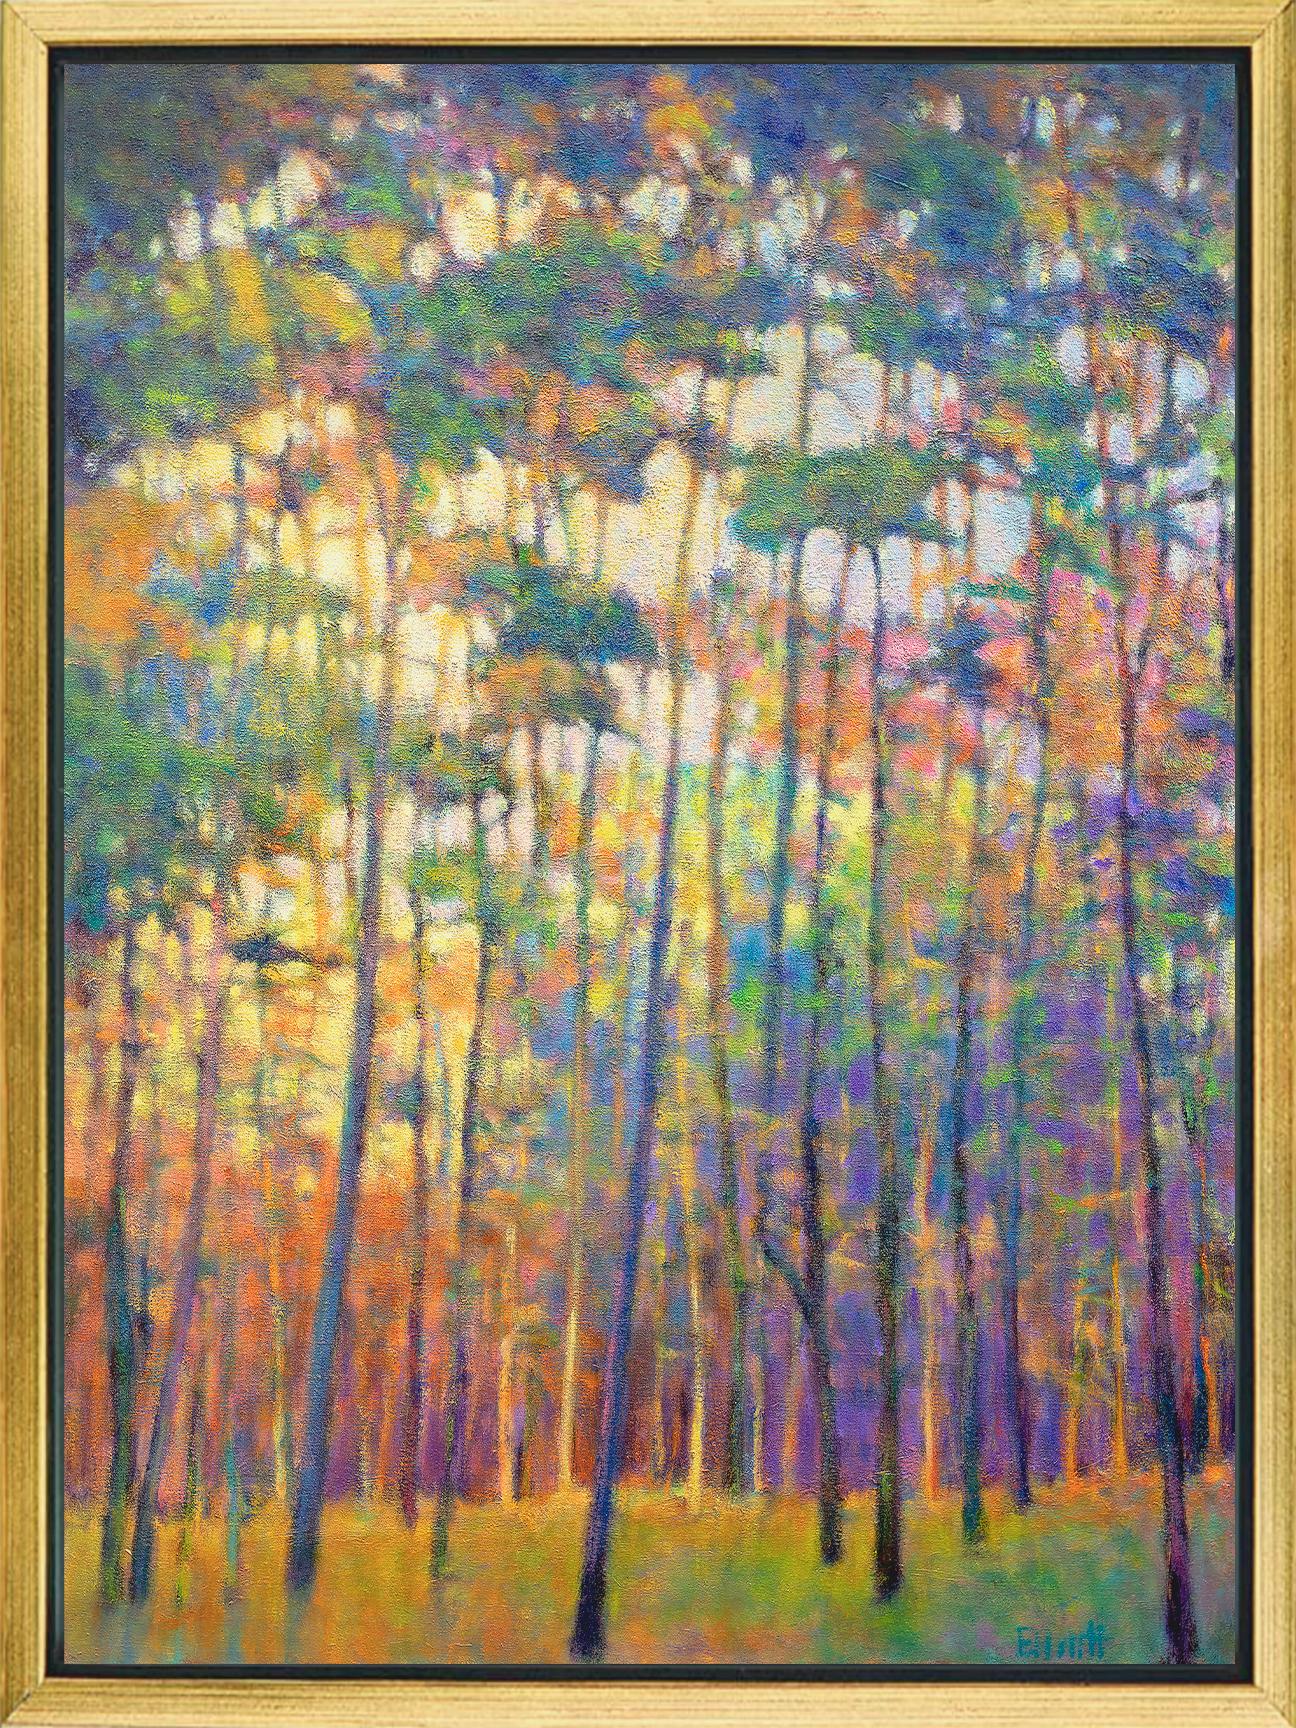 Ken Elliott Landscape Print - "Glittering Forest, " Framed Limited Edition Giclee Print, 40" x 30"